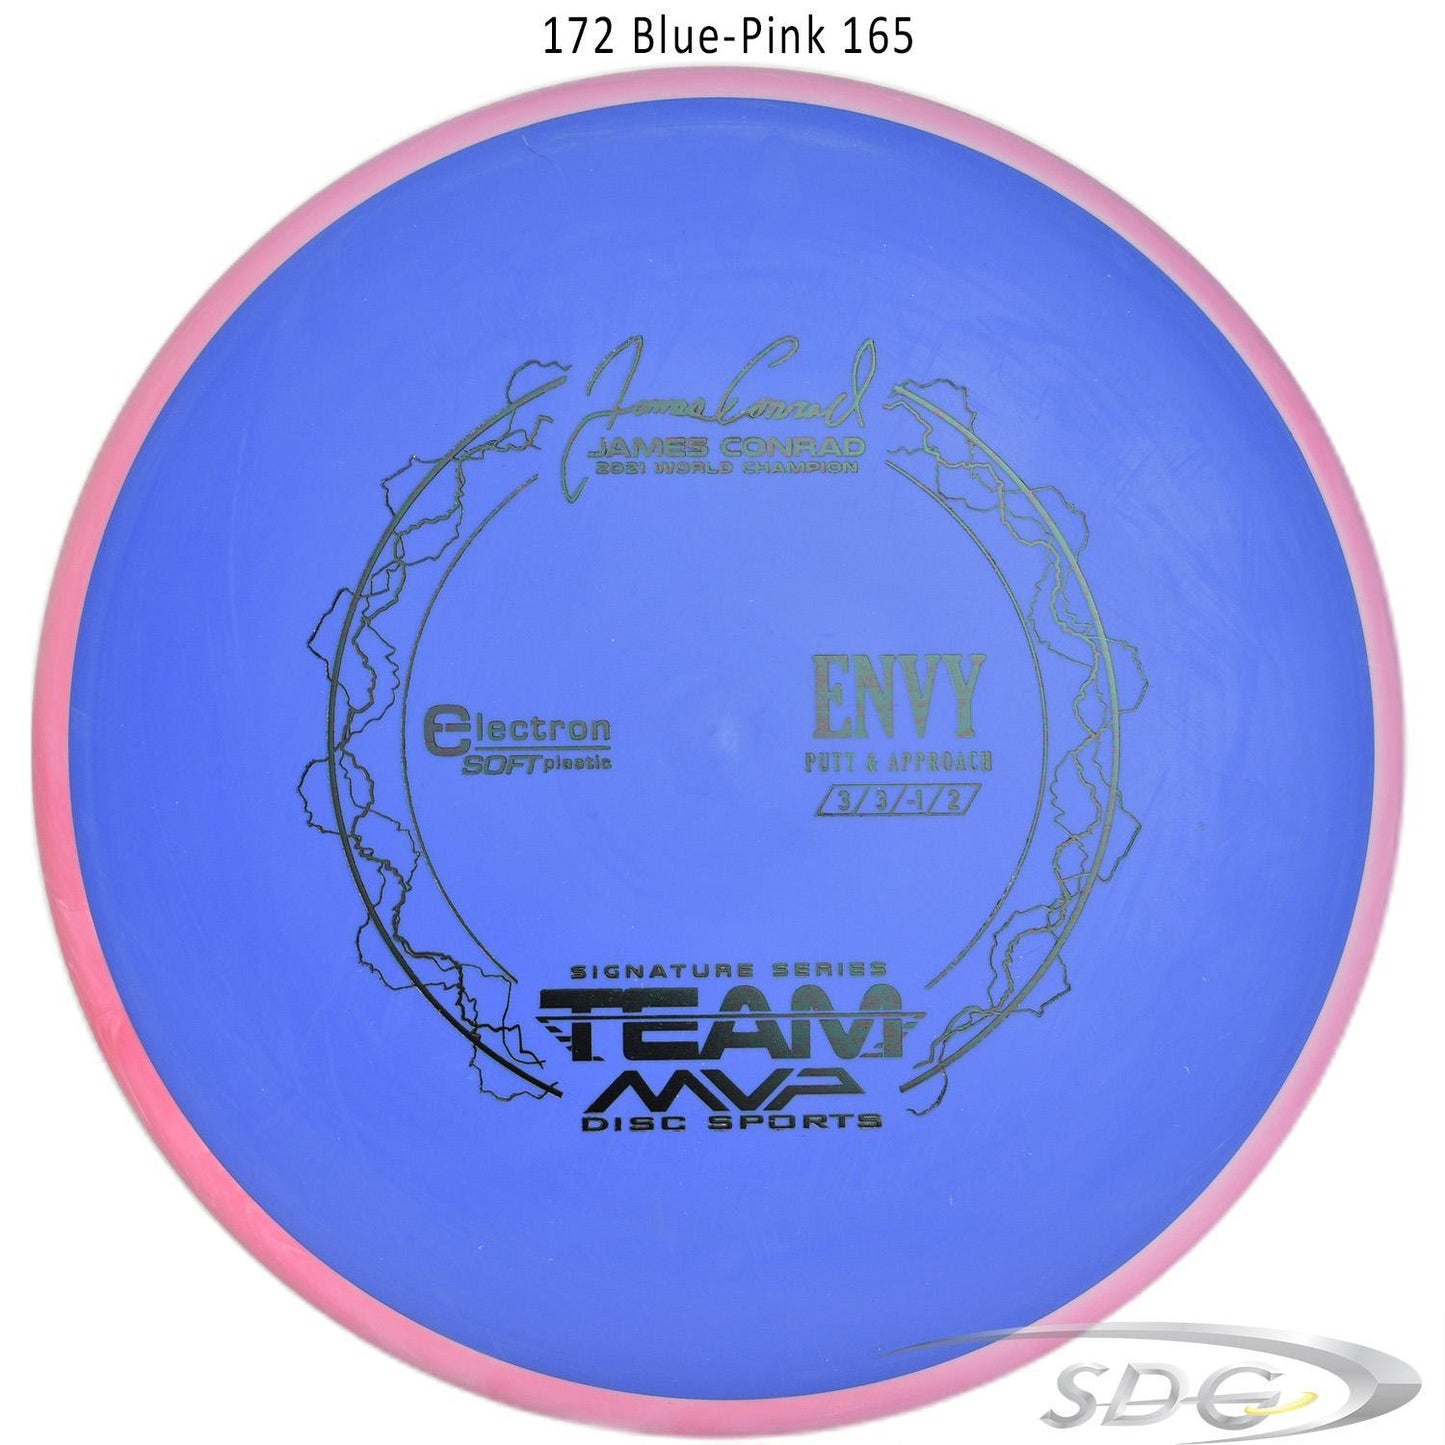 axiom-electron-envy-soft-james-conrad-signature-series-disc-golf-putter 172 Blue-Pink 165 